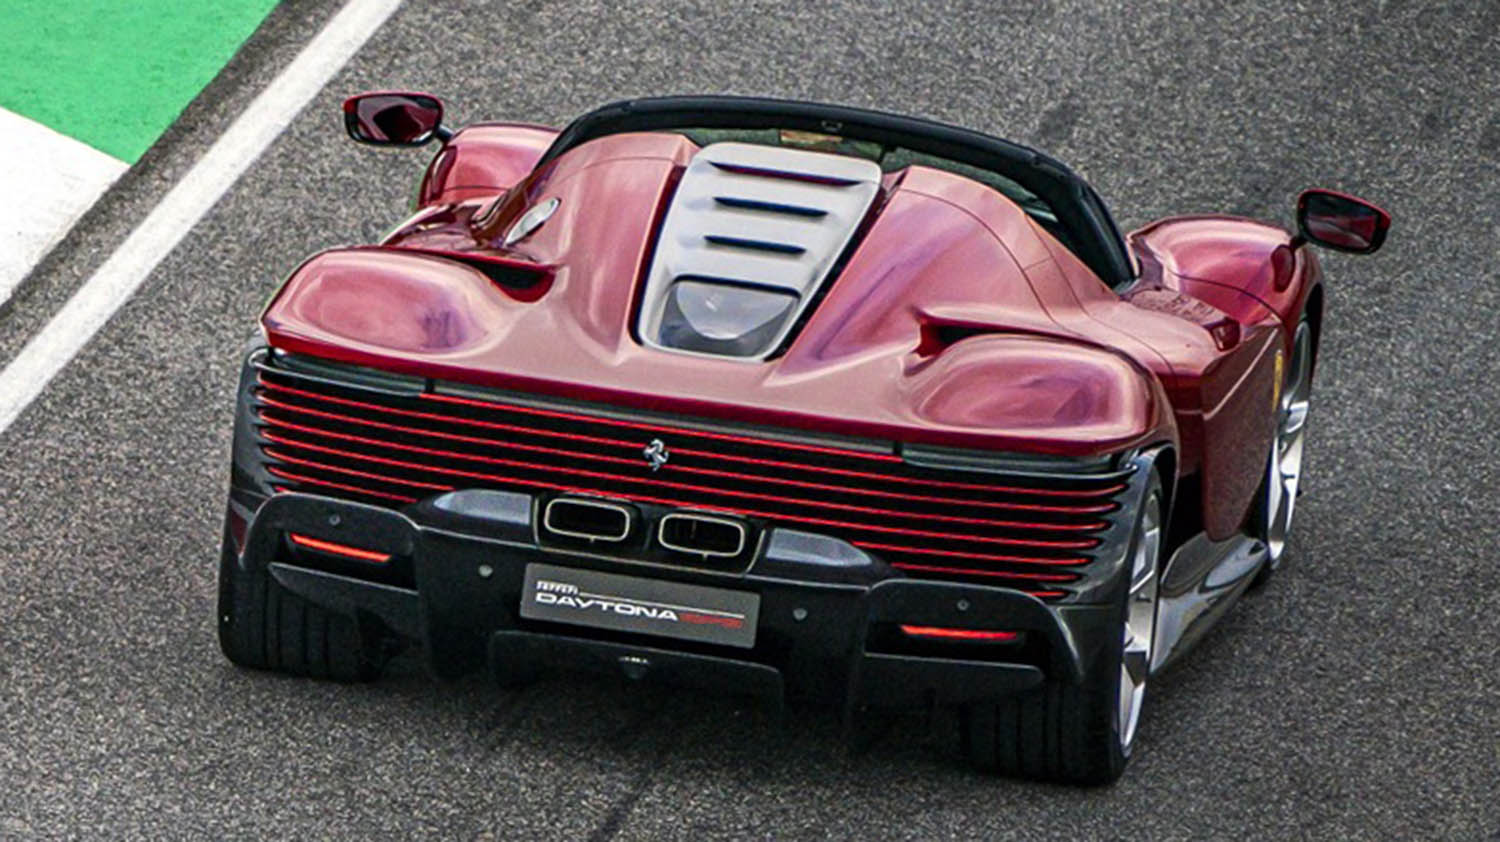 Ferrari Daytona SP3 – The New Icona Inspired By The Legendary Victories